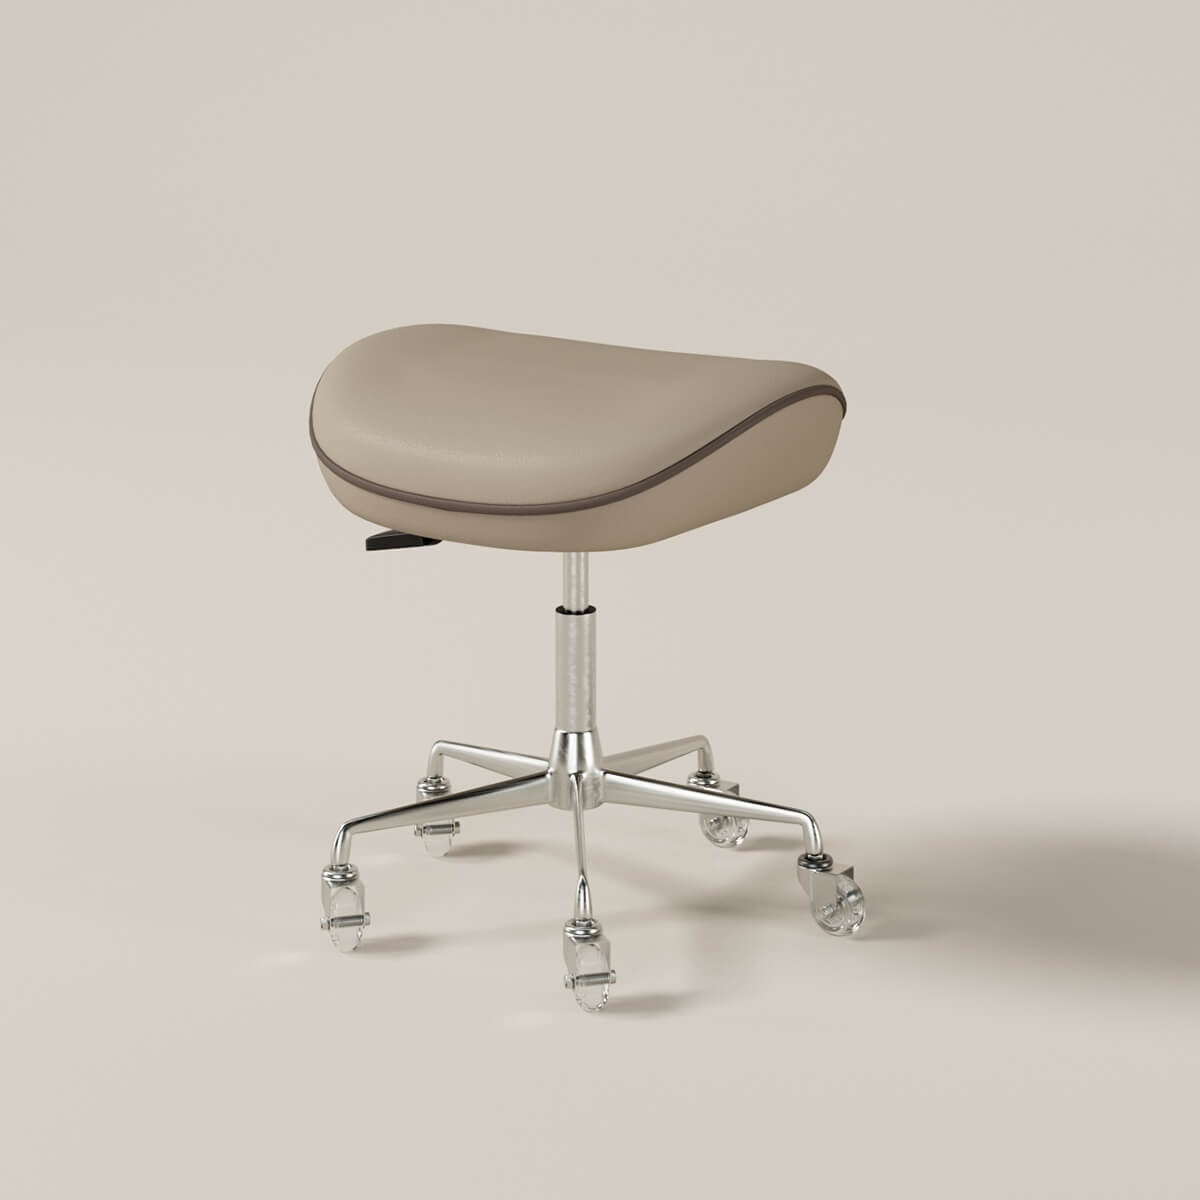 Glorall salon stool chair for spa salon nail chair